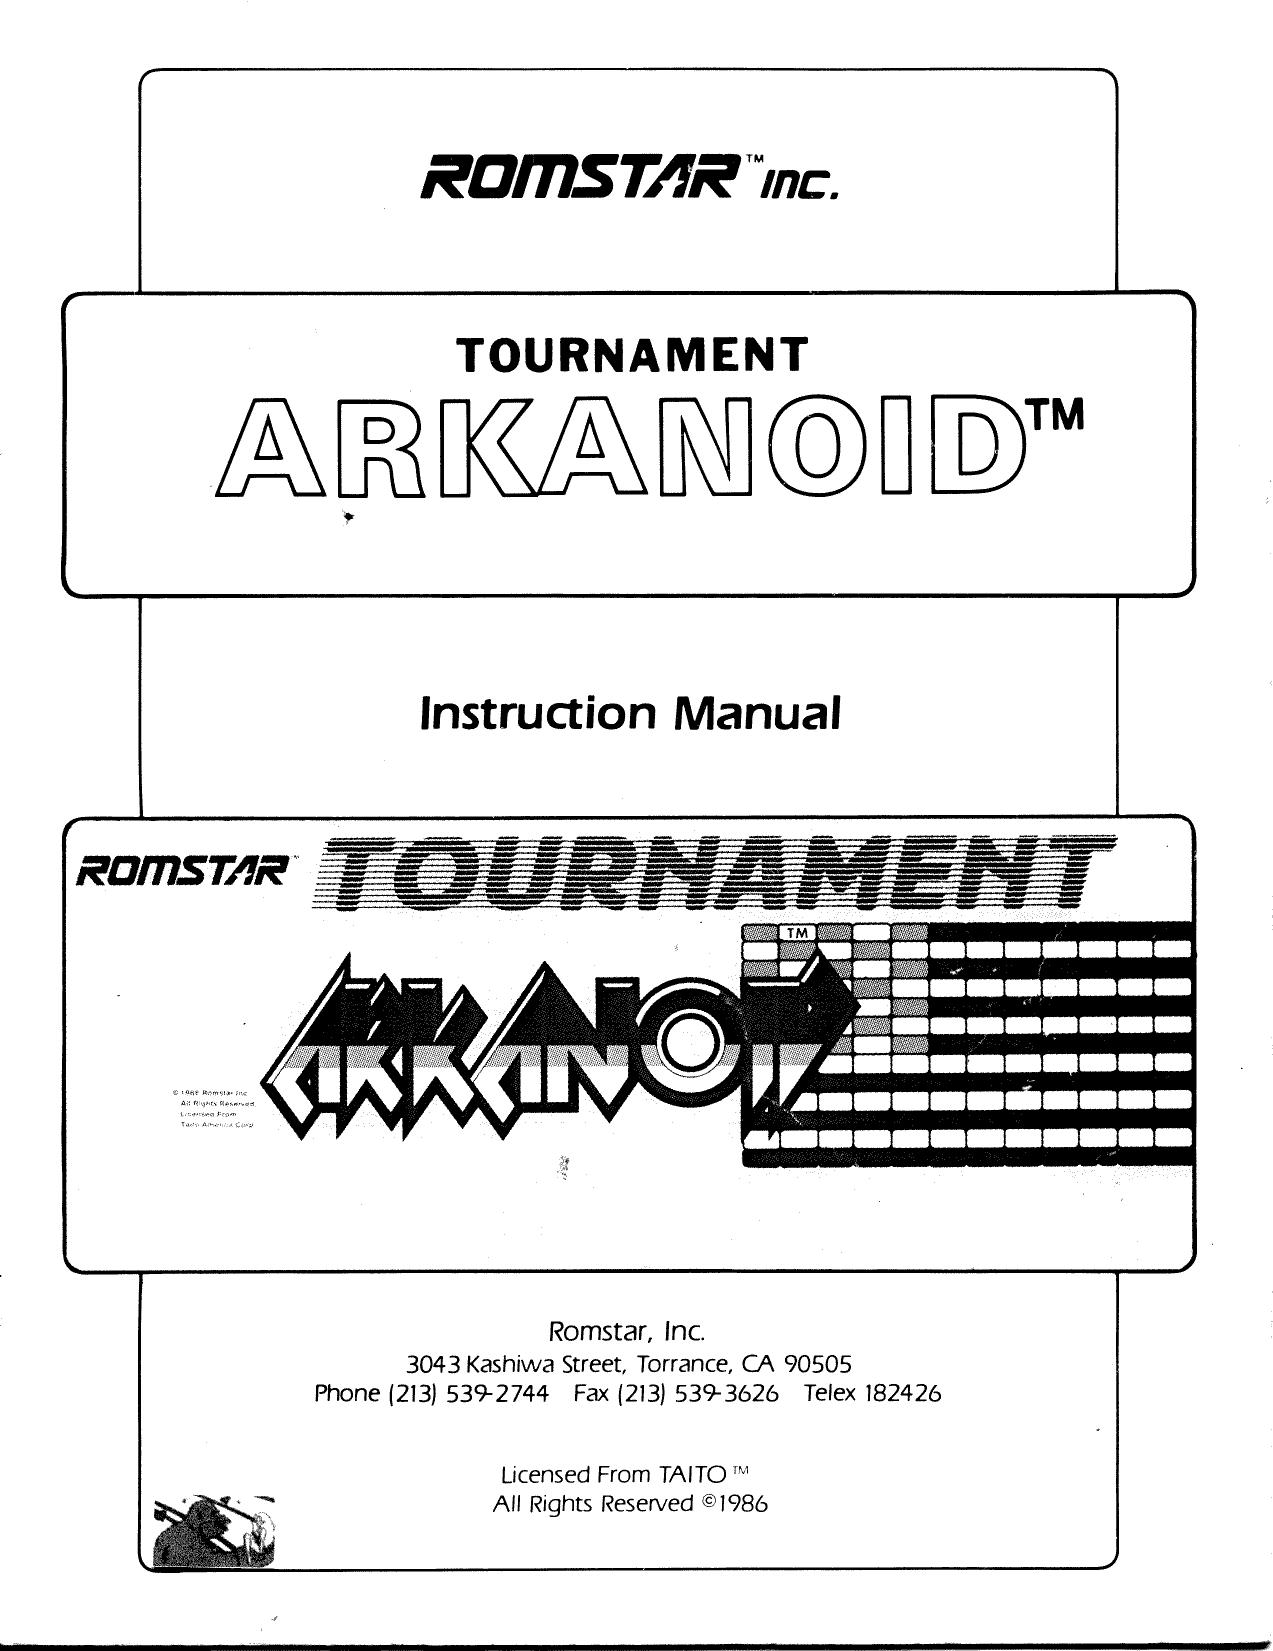 Tournament Arkanoid.man